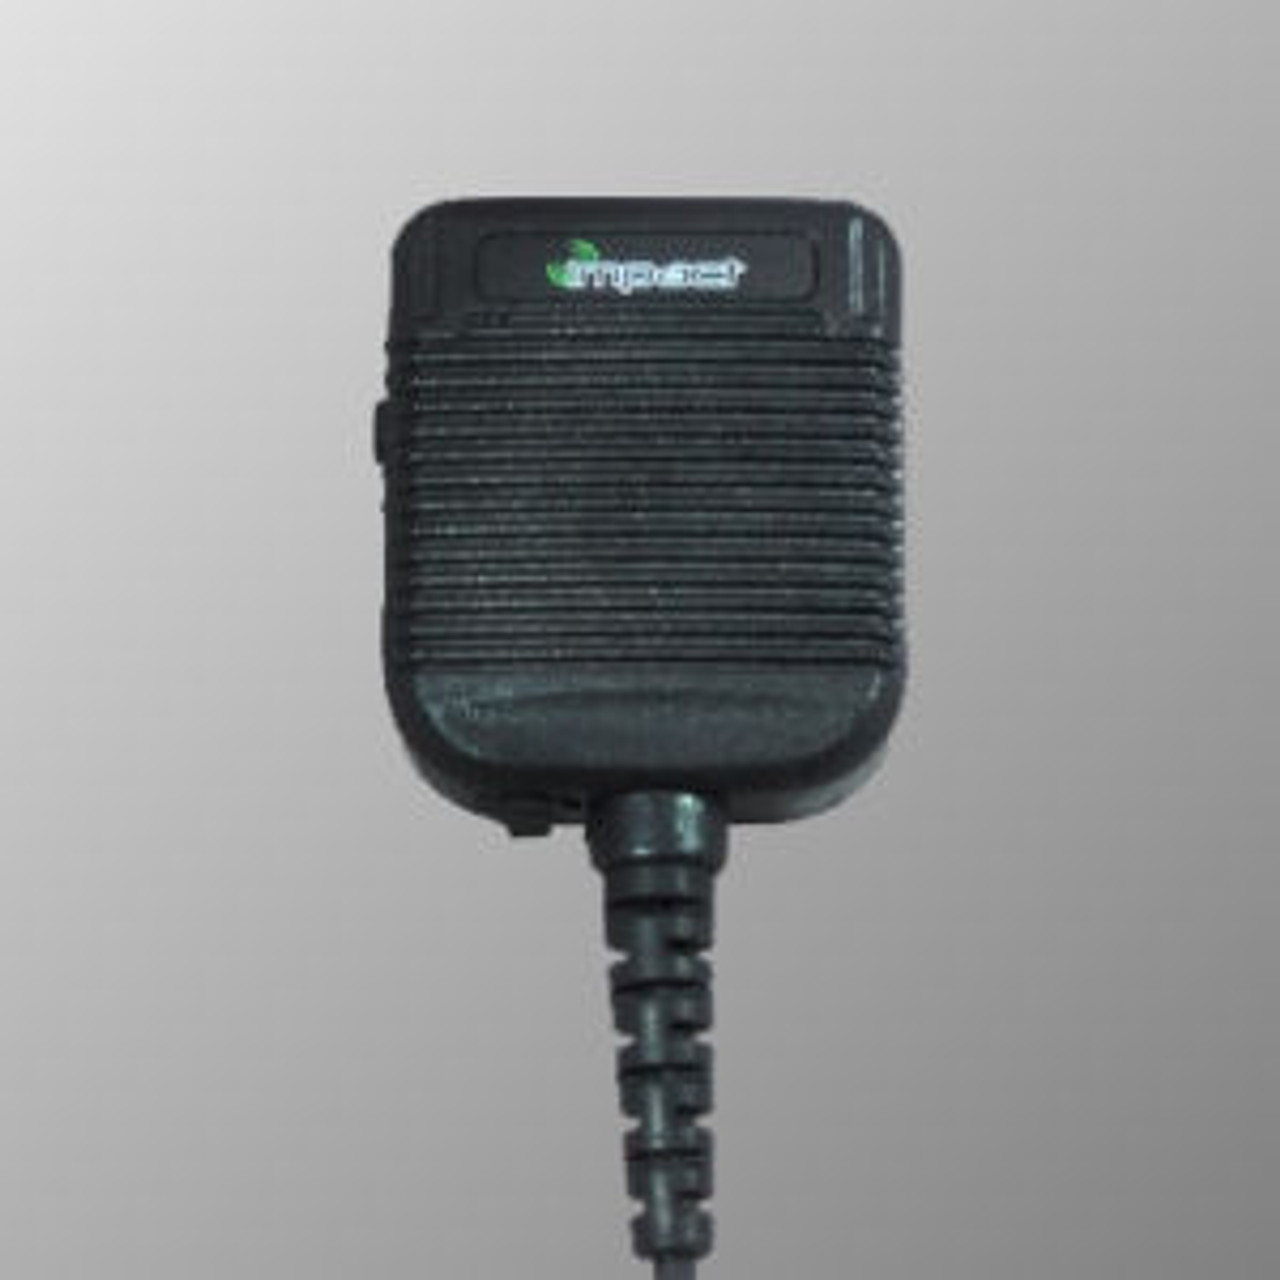 M/A-Com P5150 IP67 Ruggedized Speaker Mic.